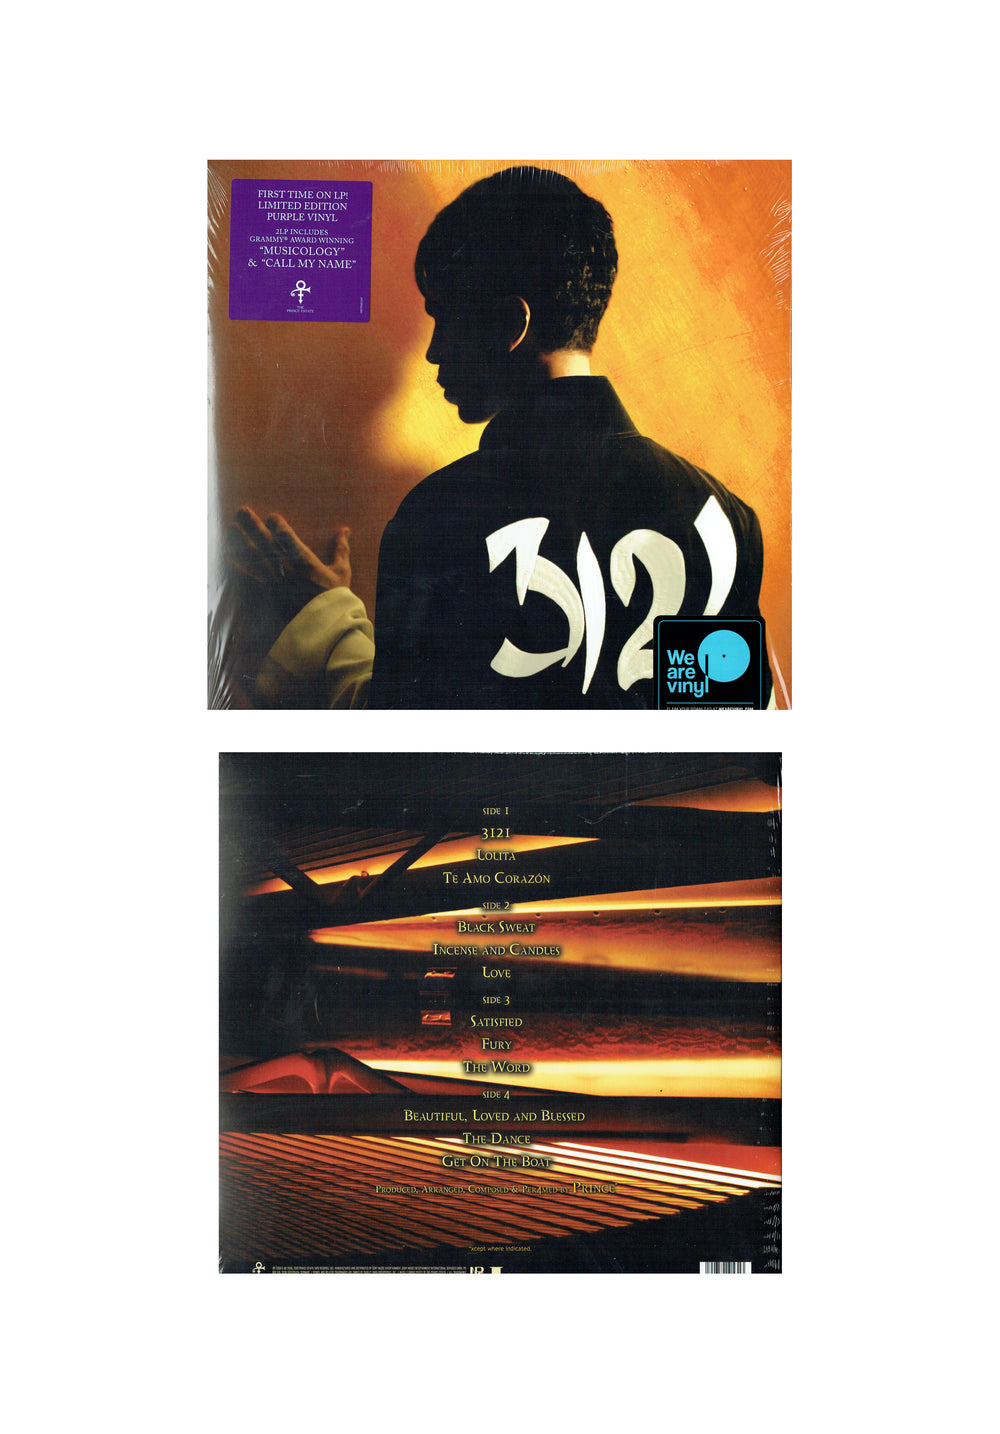 Prince – 3121 Vinyl LP x 2 RE Limited Edition Purple Vinyl Sony Legacy NEW:2019